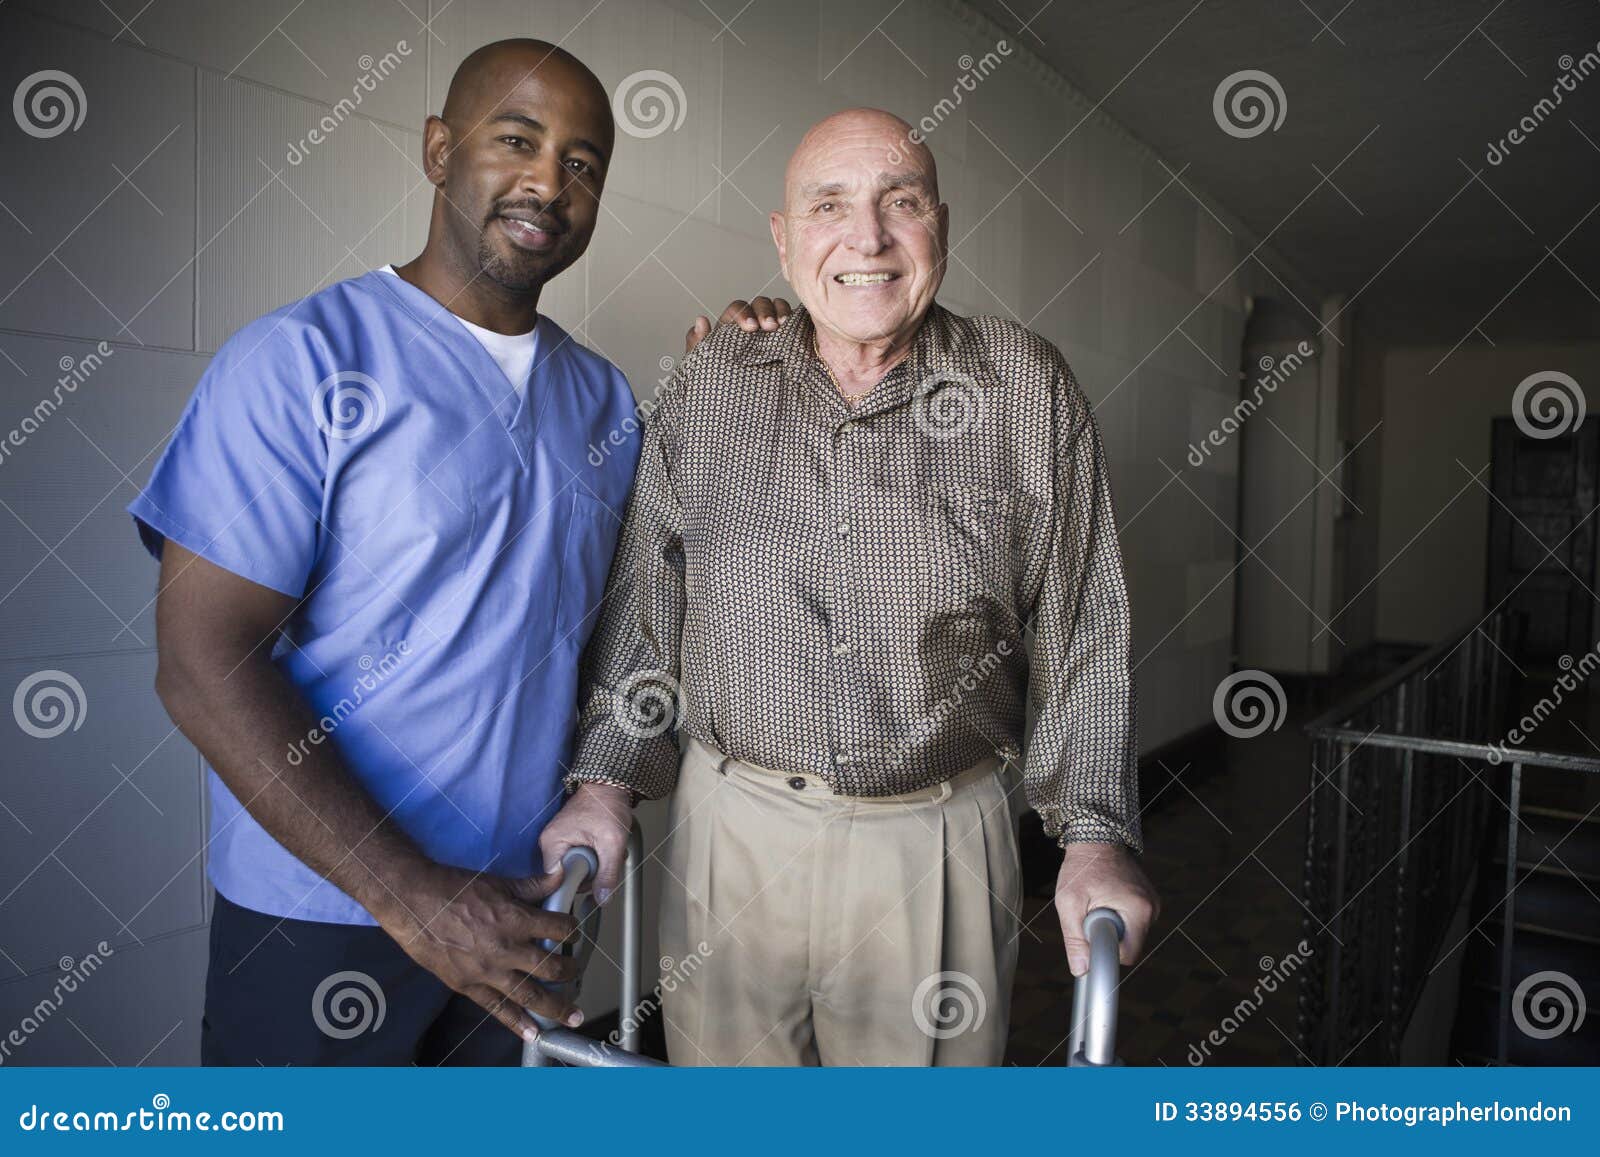 healthcare worker with elderly man